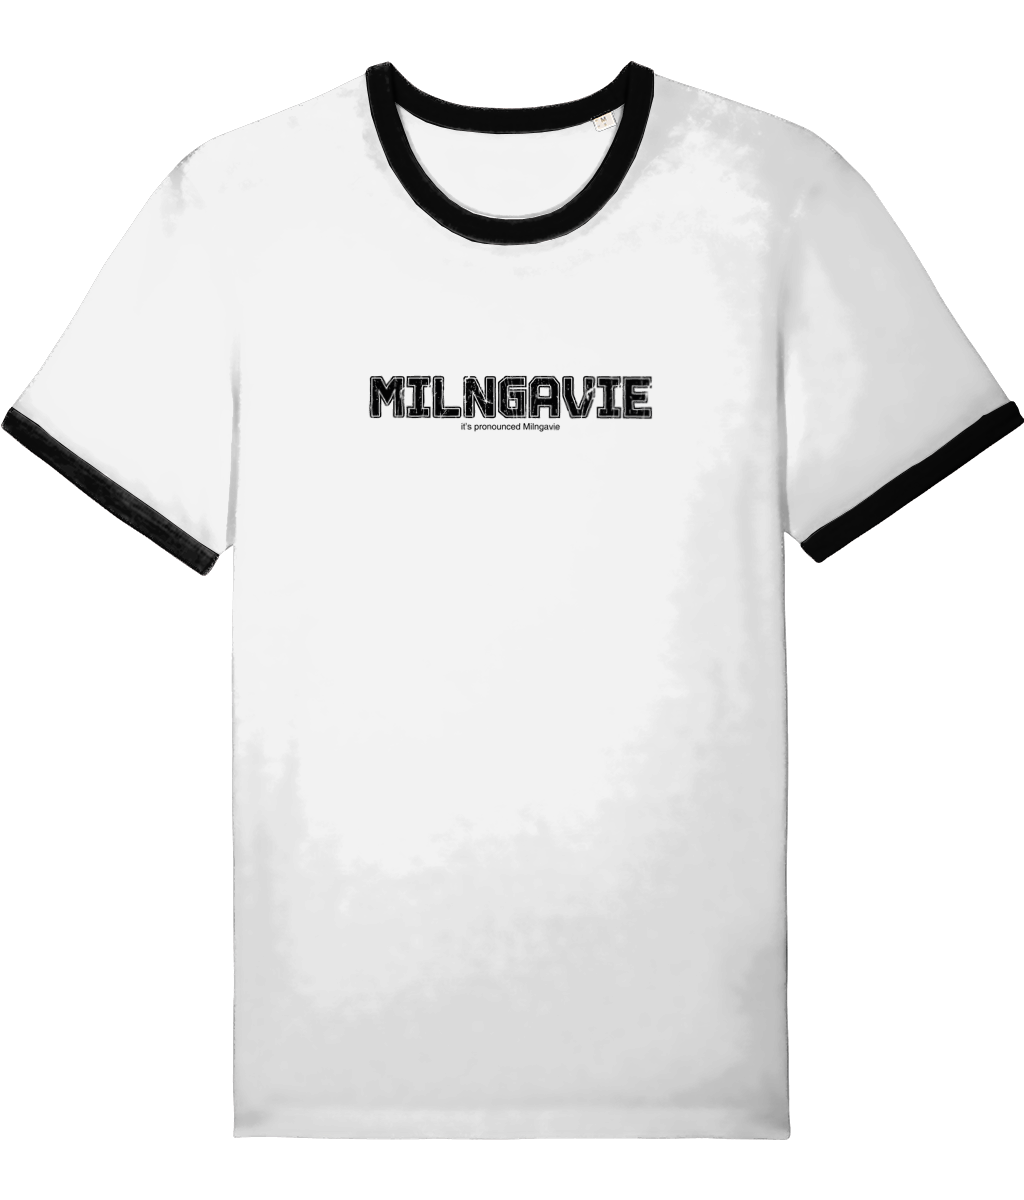 Milngavie (it's pronounced Milngavie) White ringer